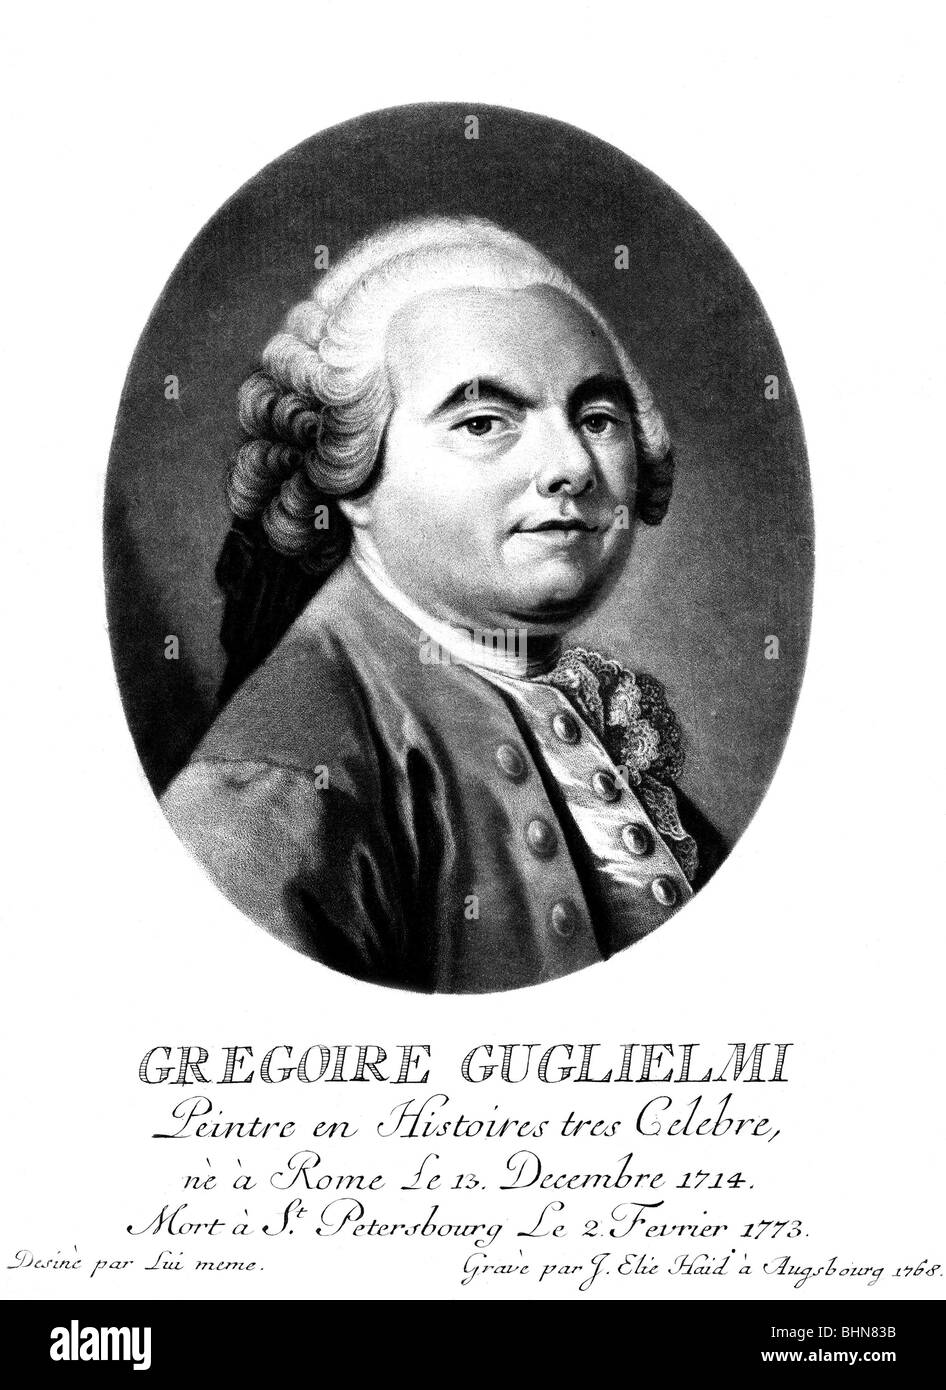 Guglielmi, Gregorio, 13.12.1714 - 2.2.1773, Italian artist (painter), portrait, engraving after J. Elias Hais, Augsburg, 1768, Stock Photo